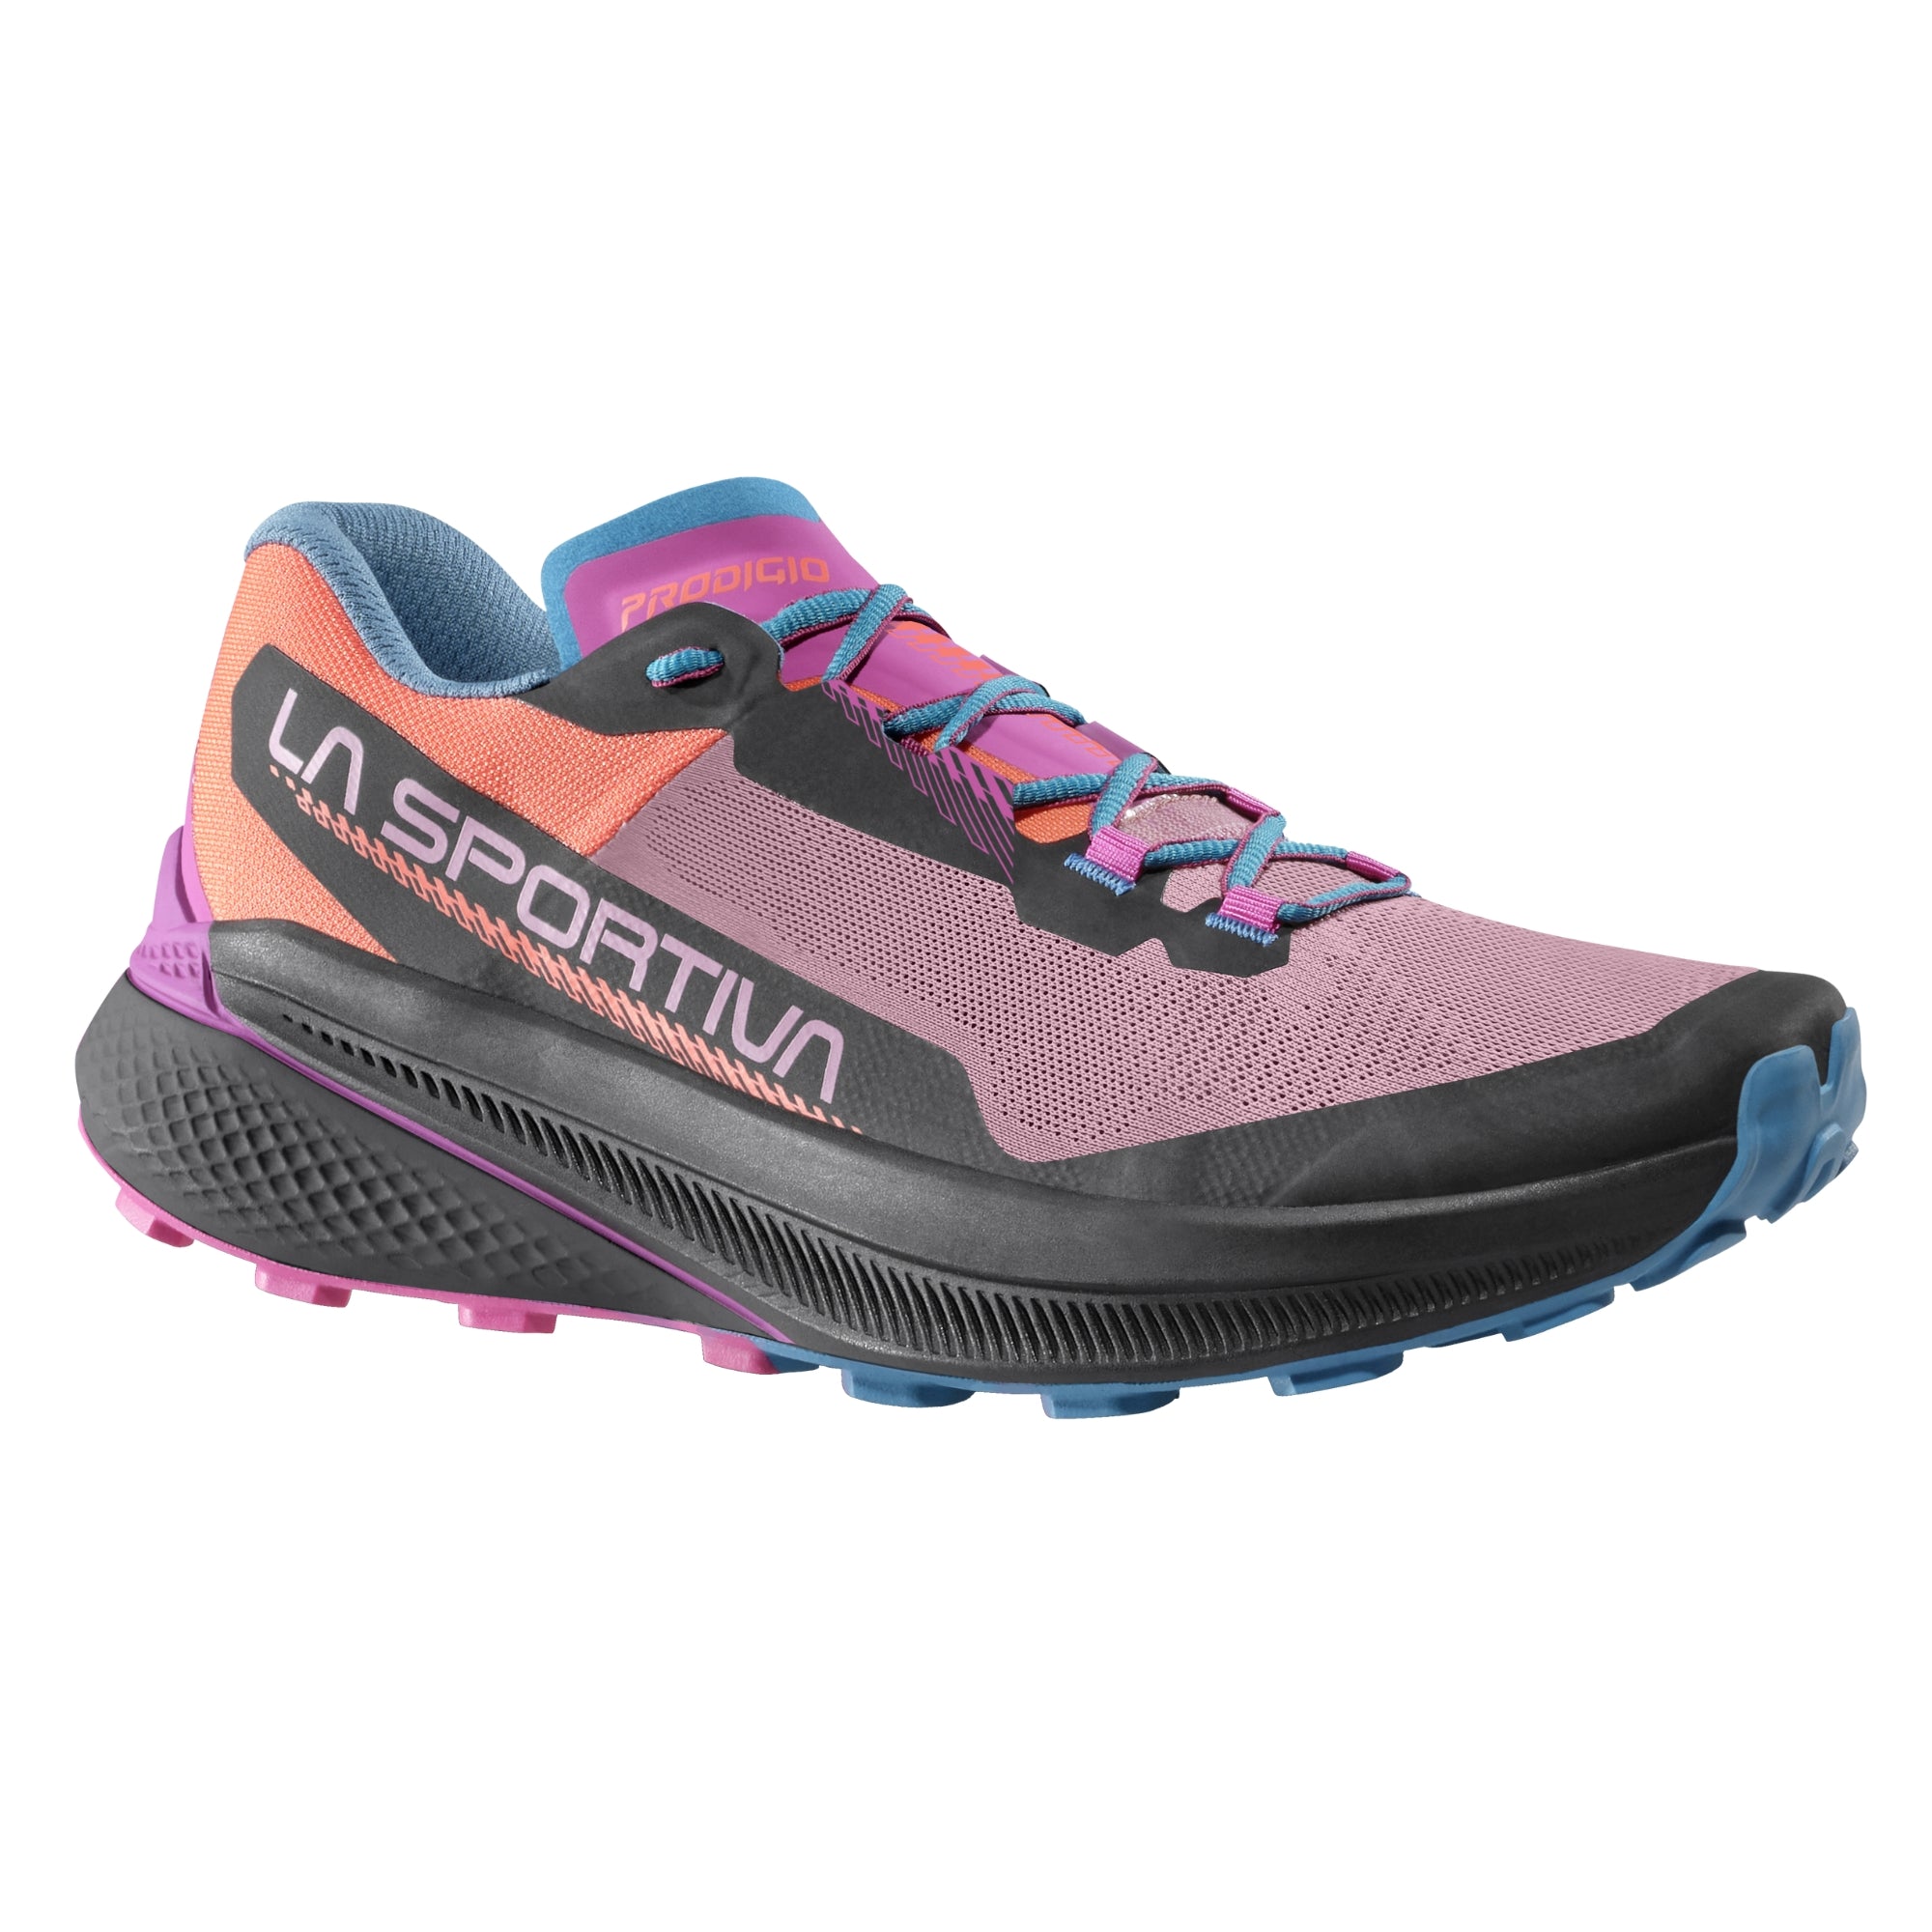 La Sportiva Prodigio Womens running shoes in Rose/Springtime colour